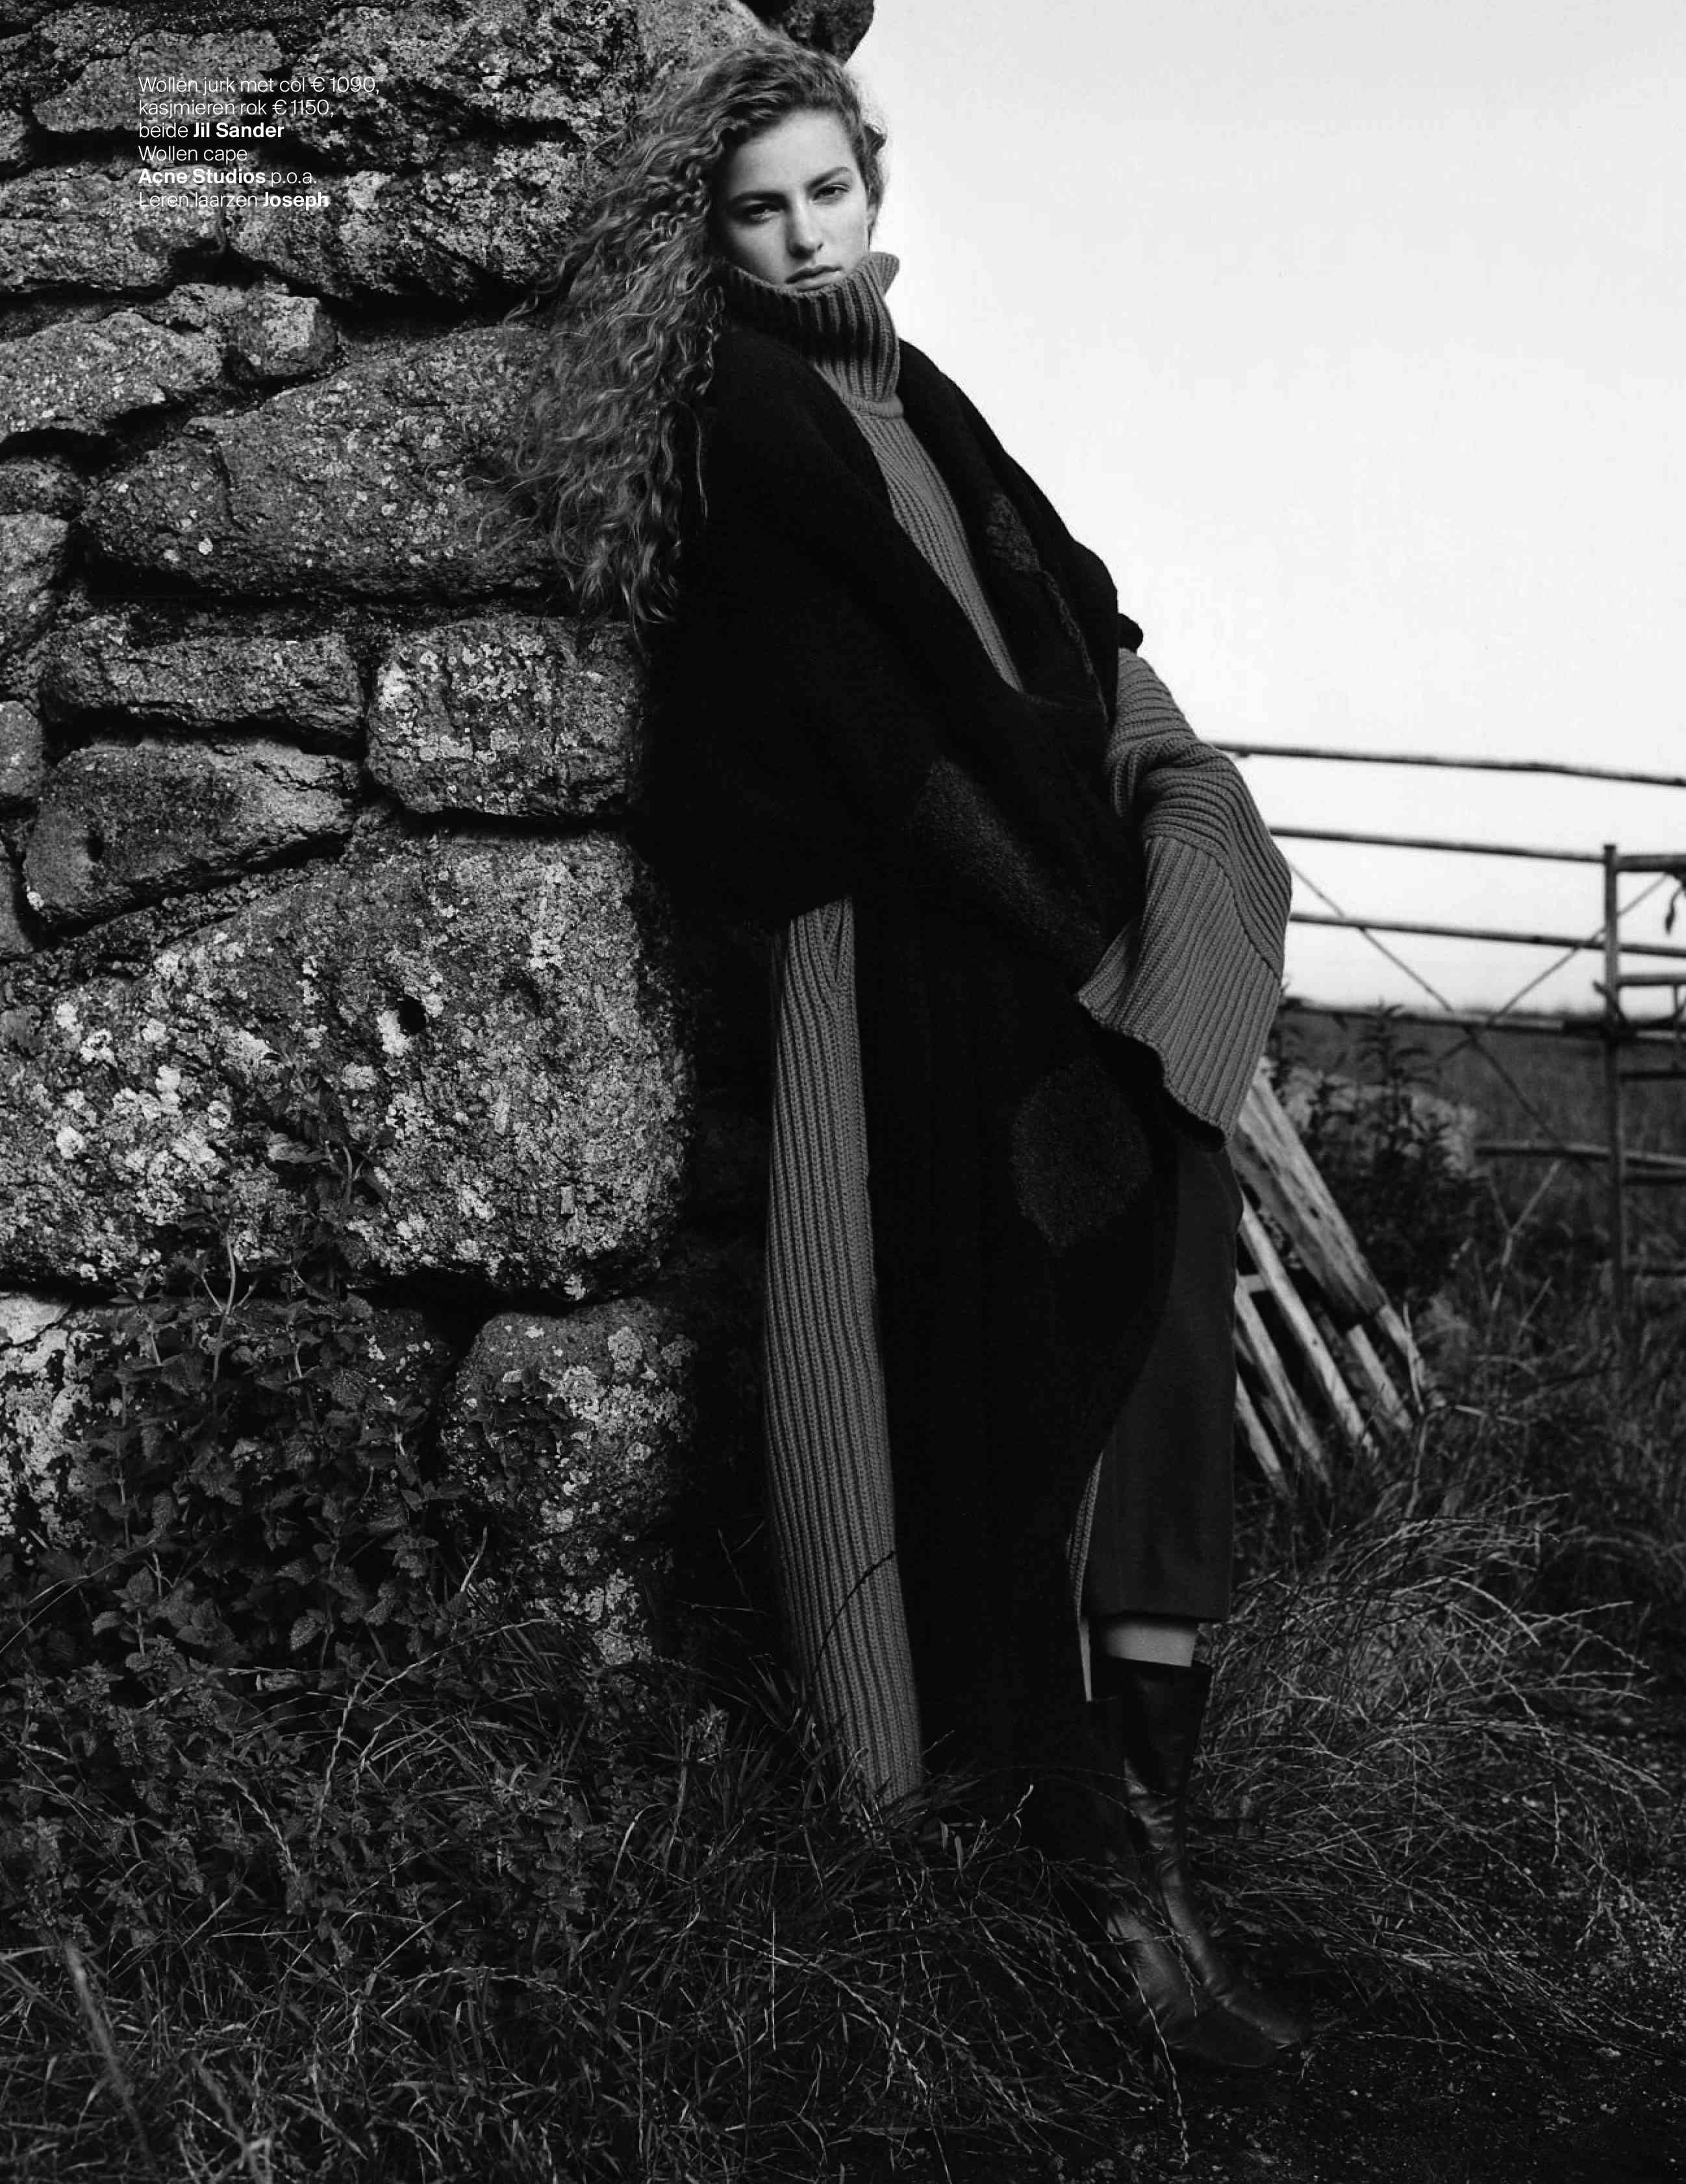 VOGUE NETHERLANDS - October 2017
Photographer: Ben Weller
Model: Felice Nova
Stylist: Dimphy Den Otter
Location: Cornwall, UK